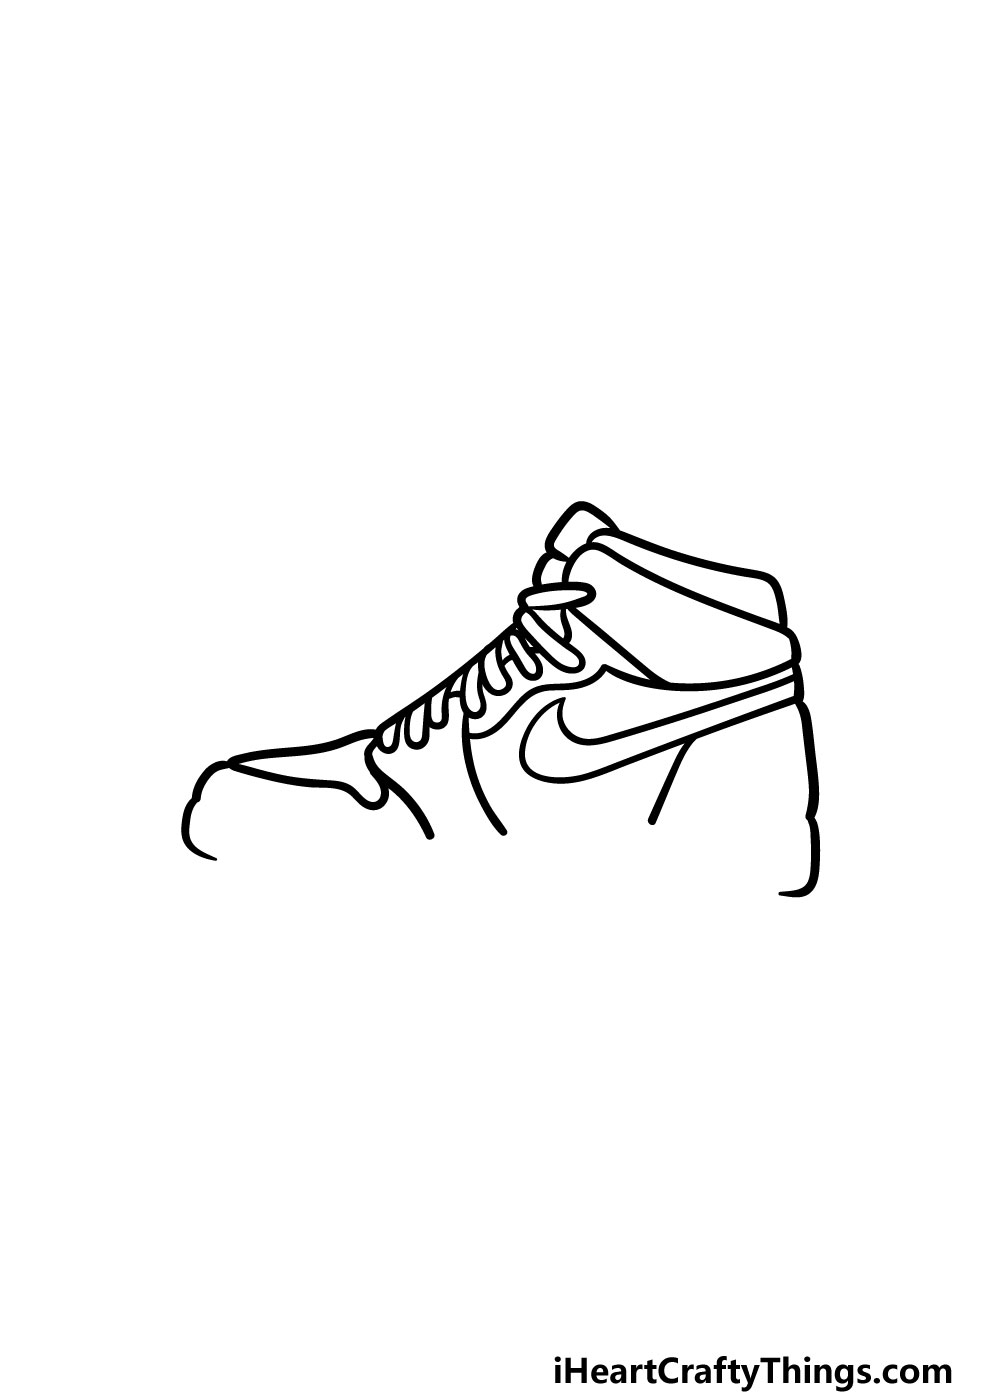 Jordan Shoe Drawing - How To Draw Jordan Shoe Step By Step - Coloring Home